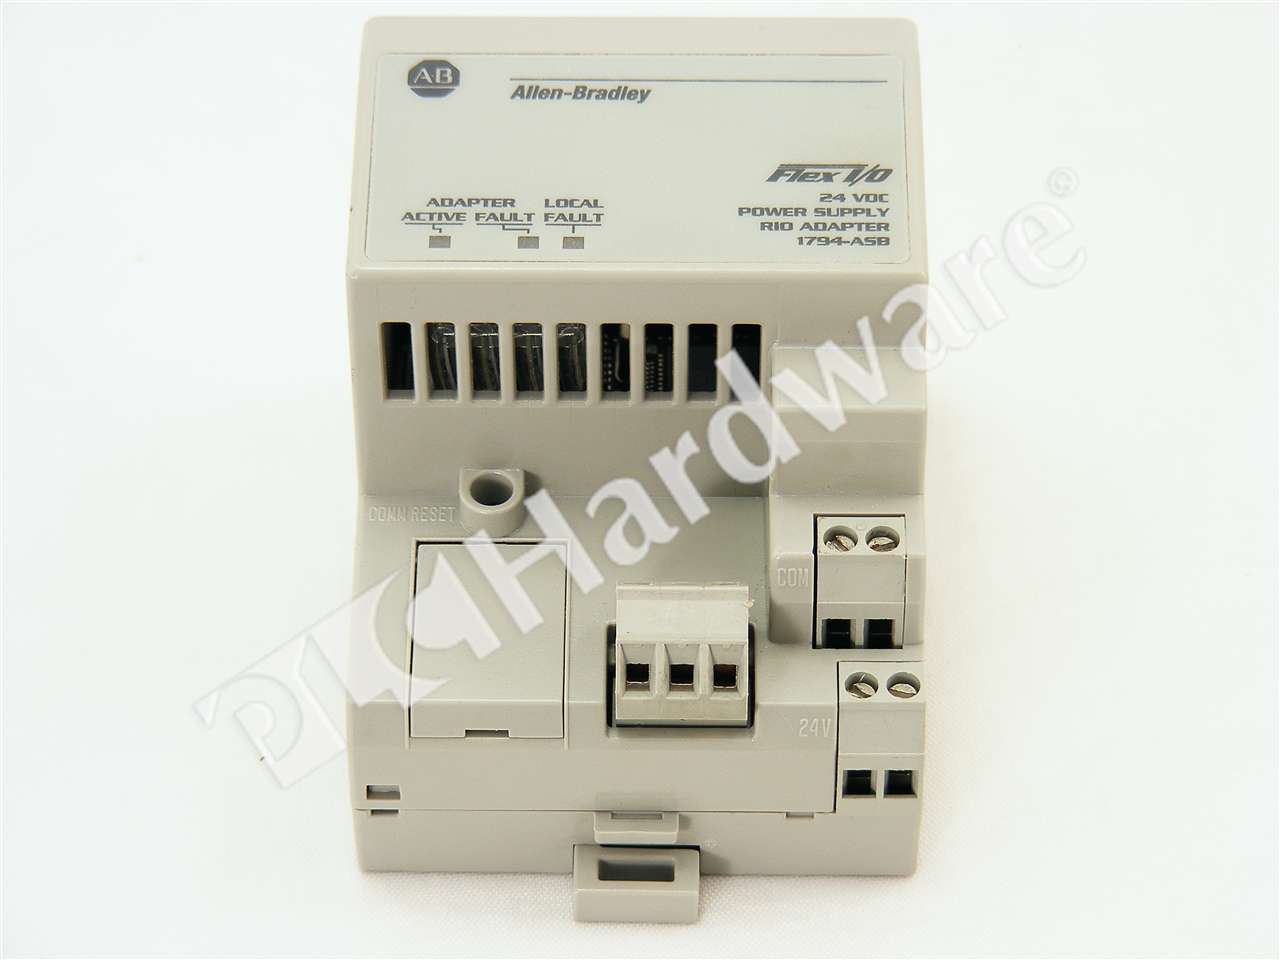 PLC Hardware - Allen Bradley 1794-ASB Series C, Used in PLCH Packaging